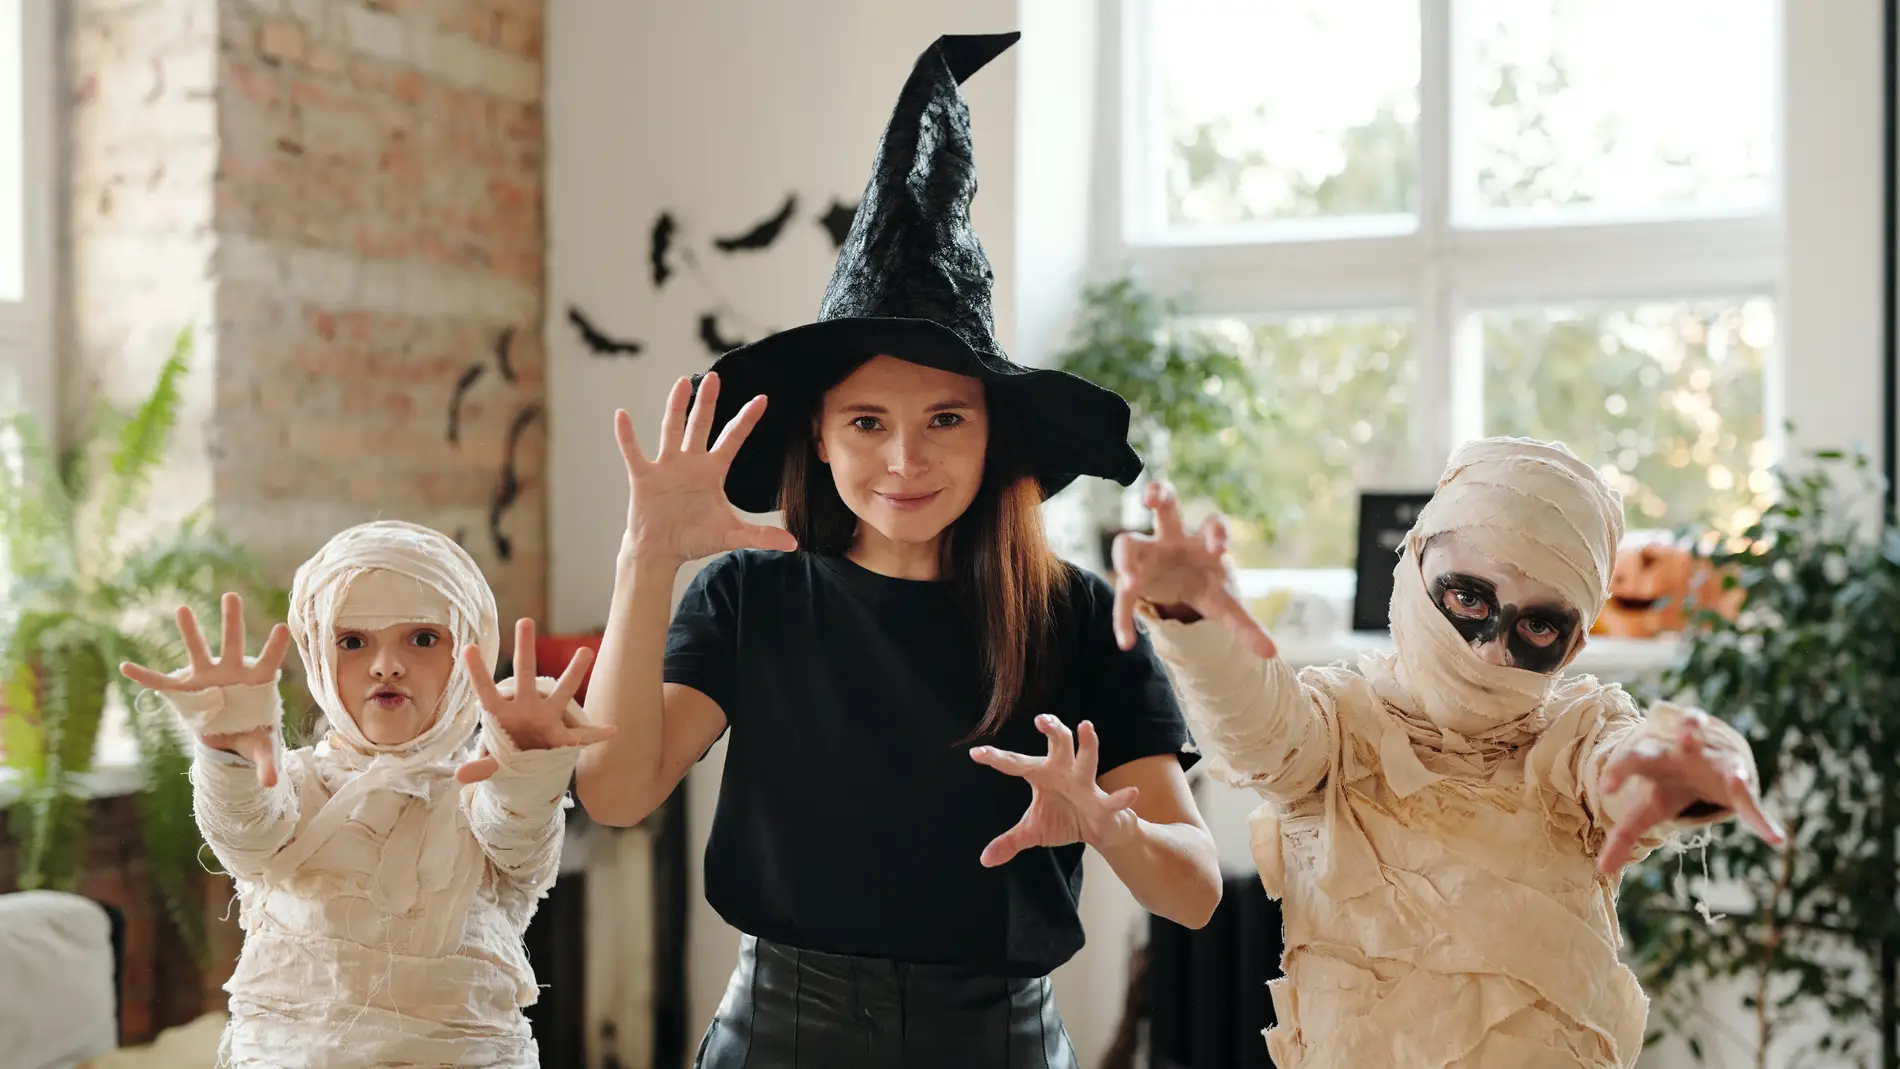 Niños disfrazados para Halloween